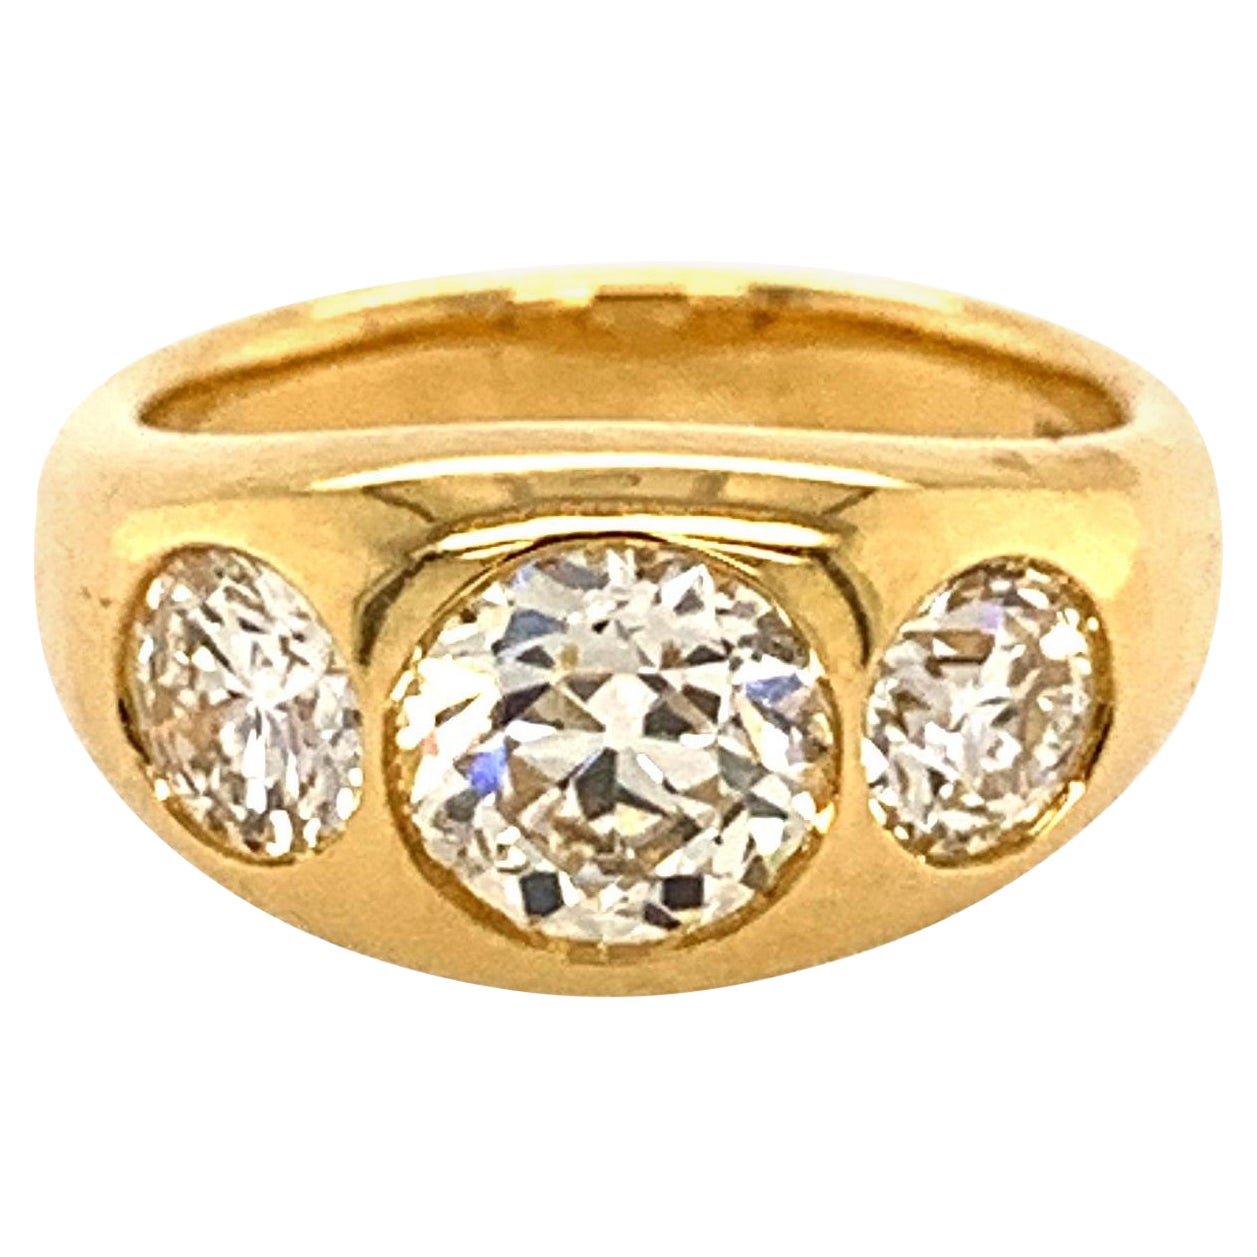 Sophia D. 18K Yellow Gold with 1.63 Carat Center Round Diamond Ring